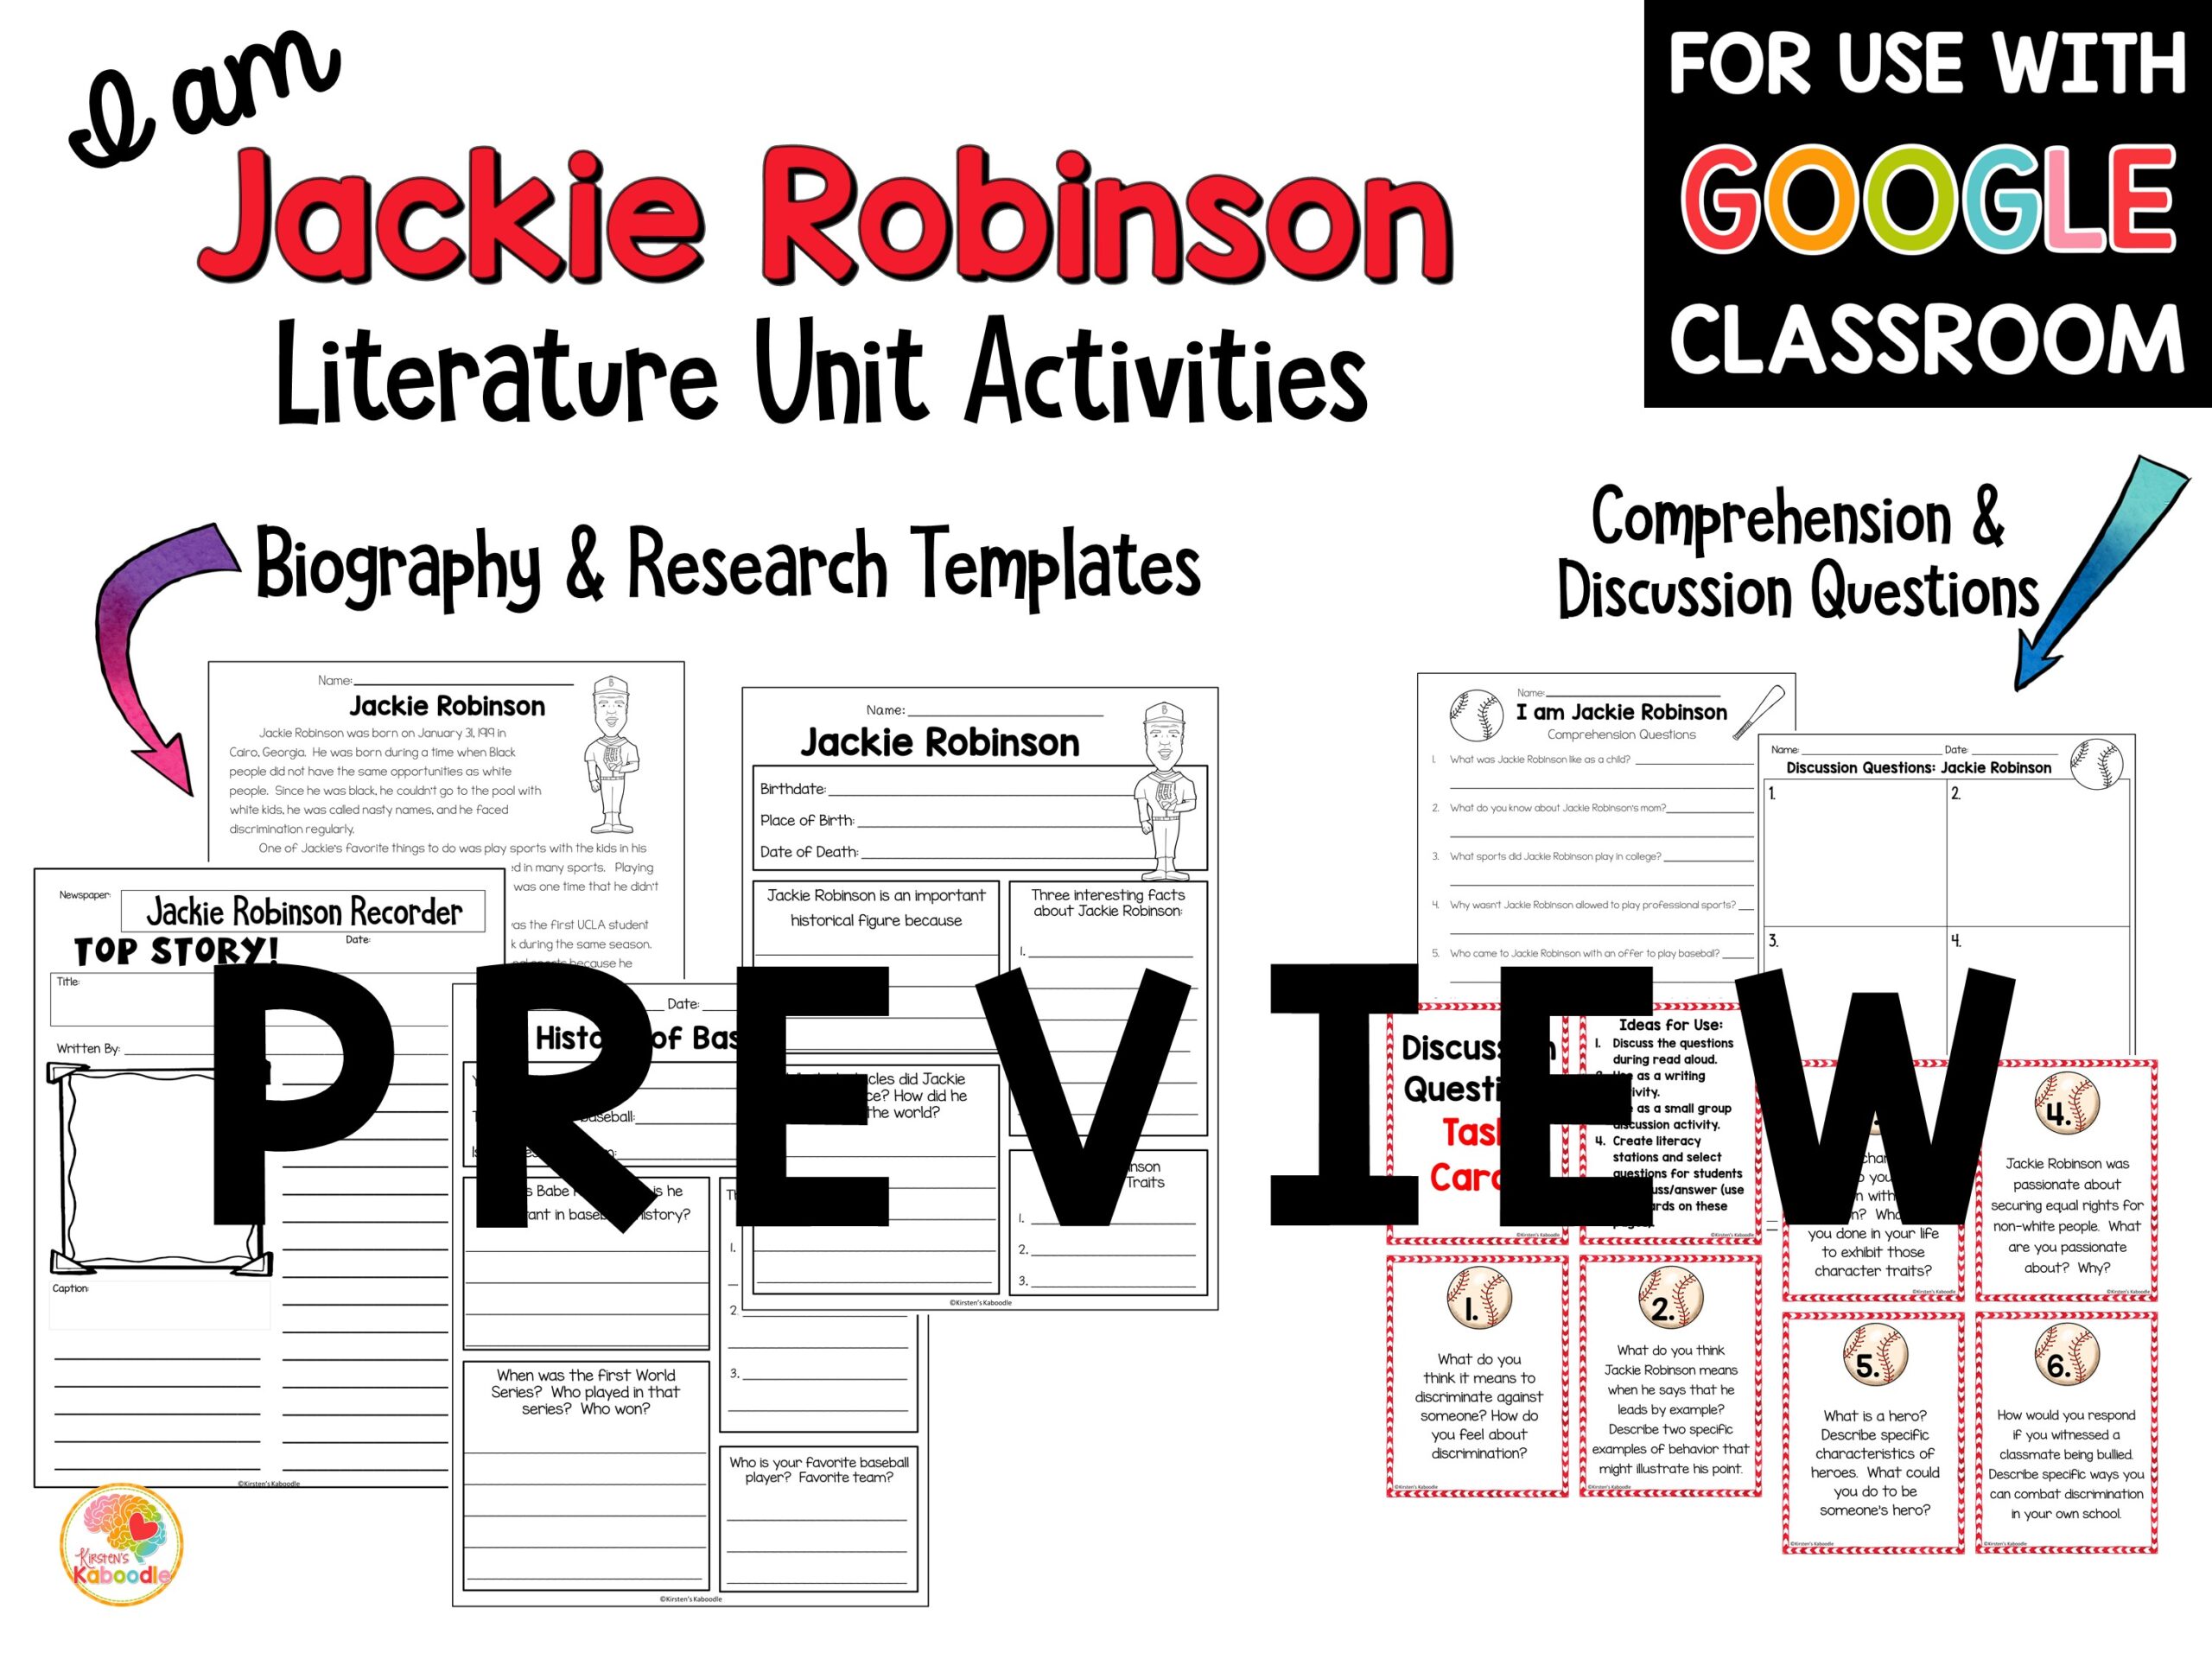 i-am-jackie-robinson-activities